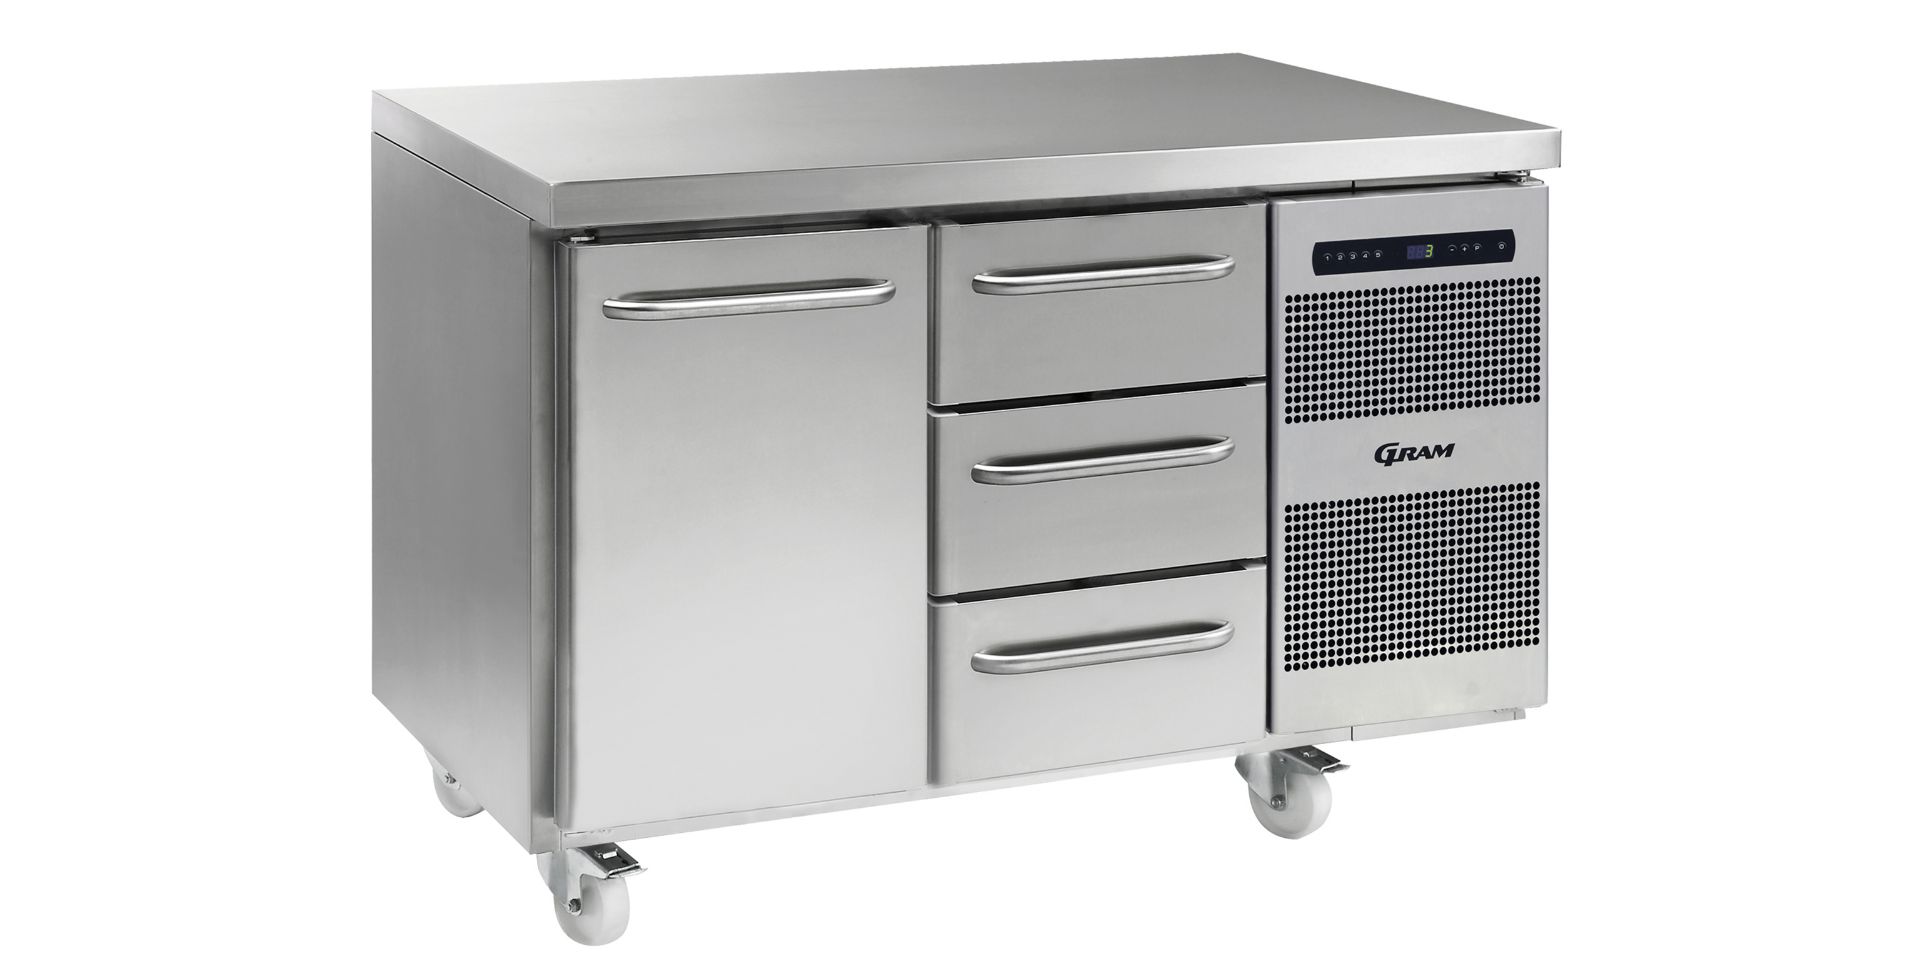 Gastro K 1407 CSG A DL/3D C1 U refrigerated counter